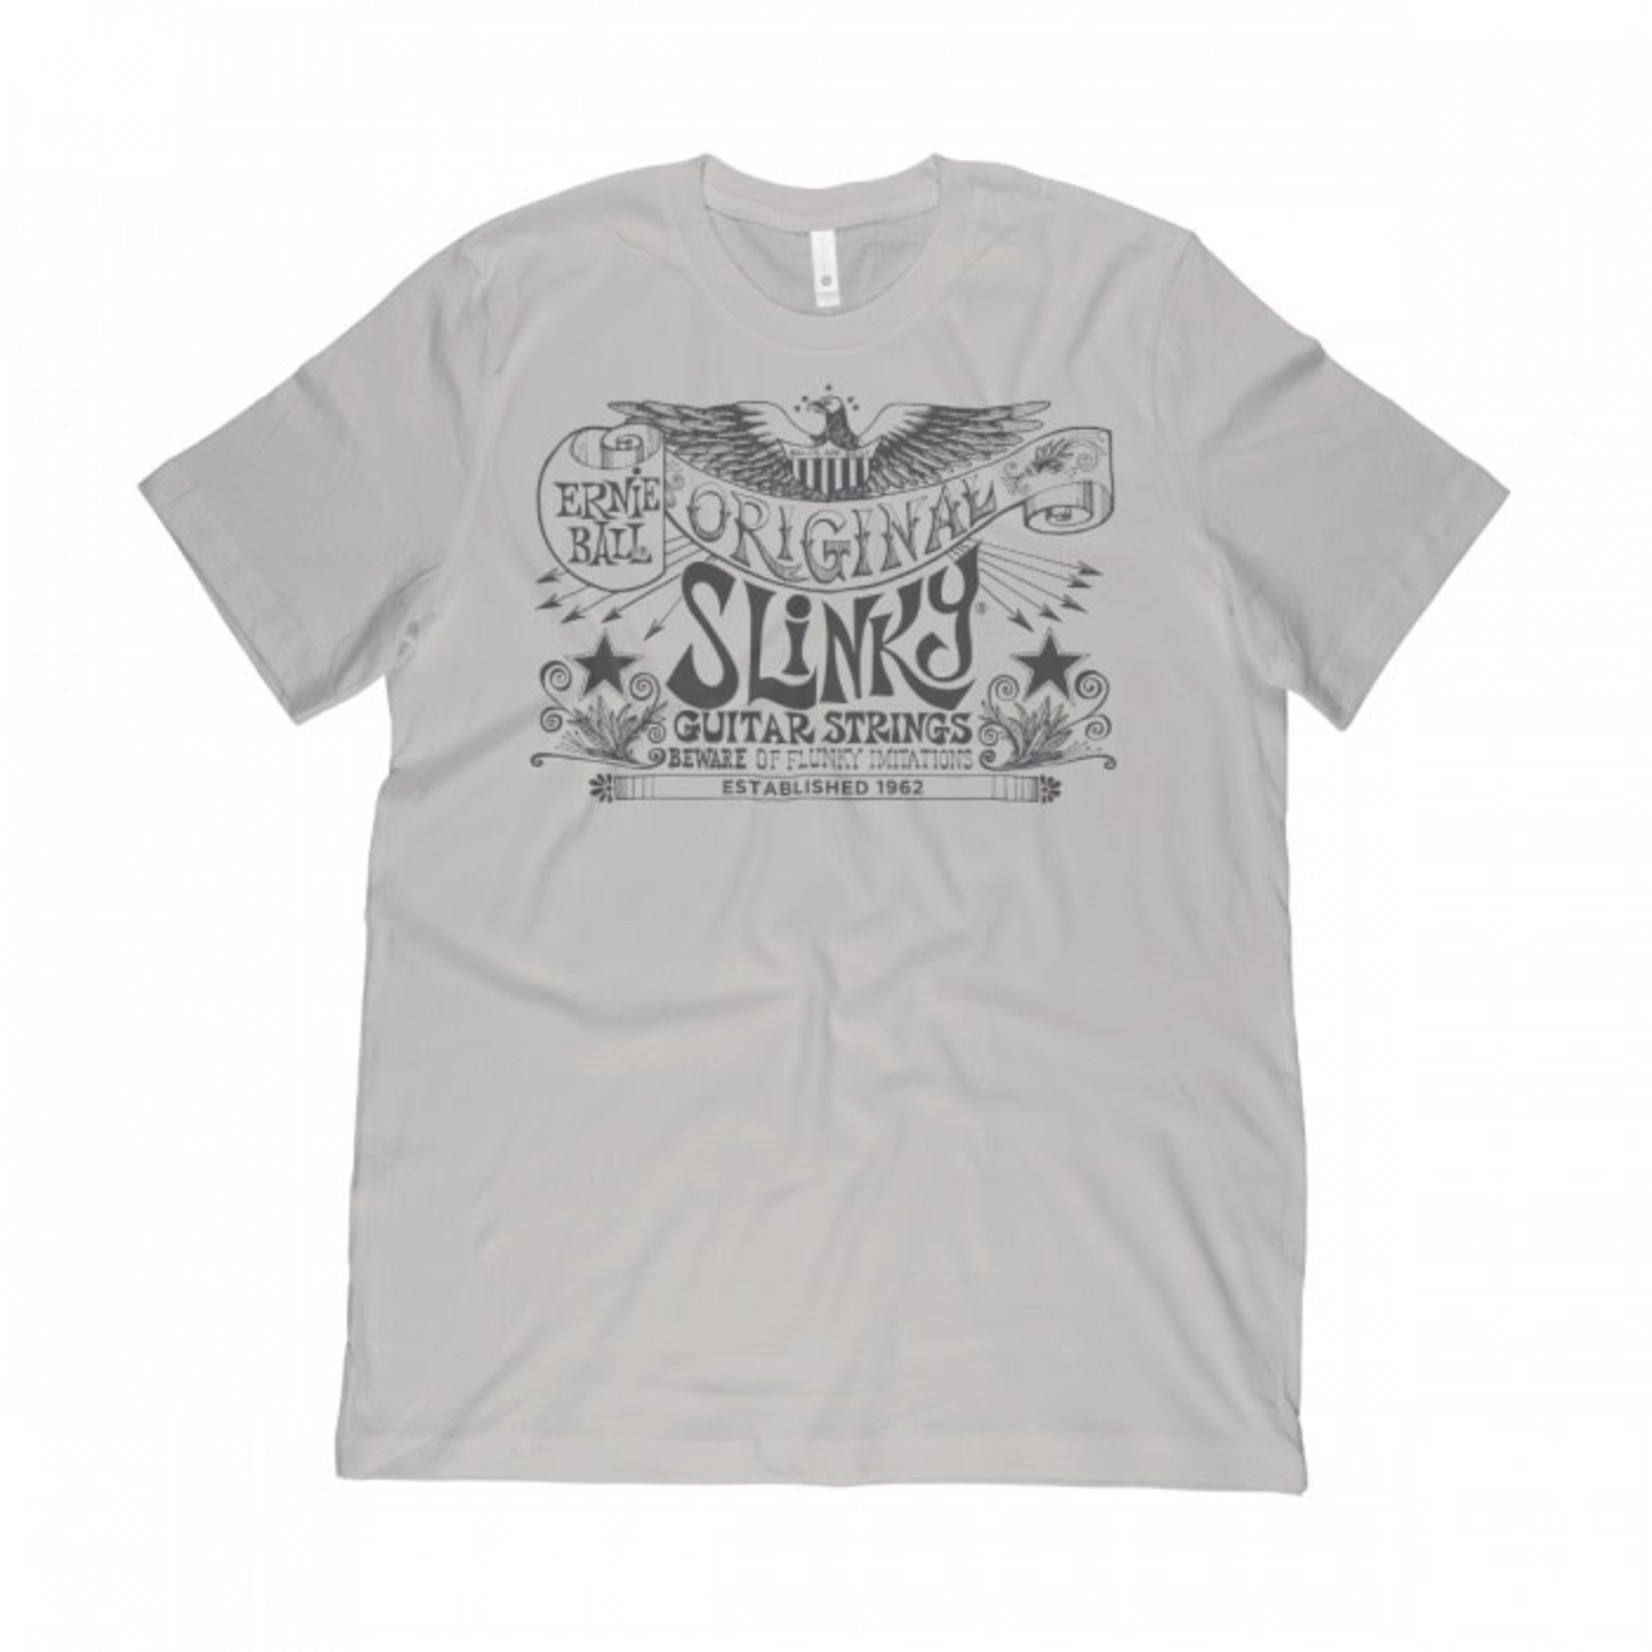 Ernie Ball Ernie Ball Original Slinky Silver T-Shirt